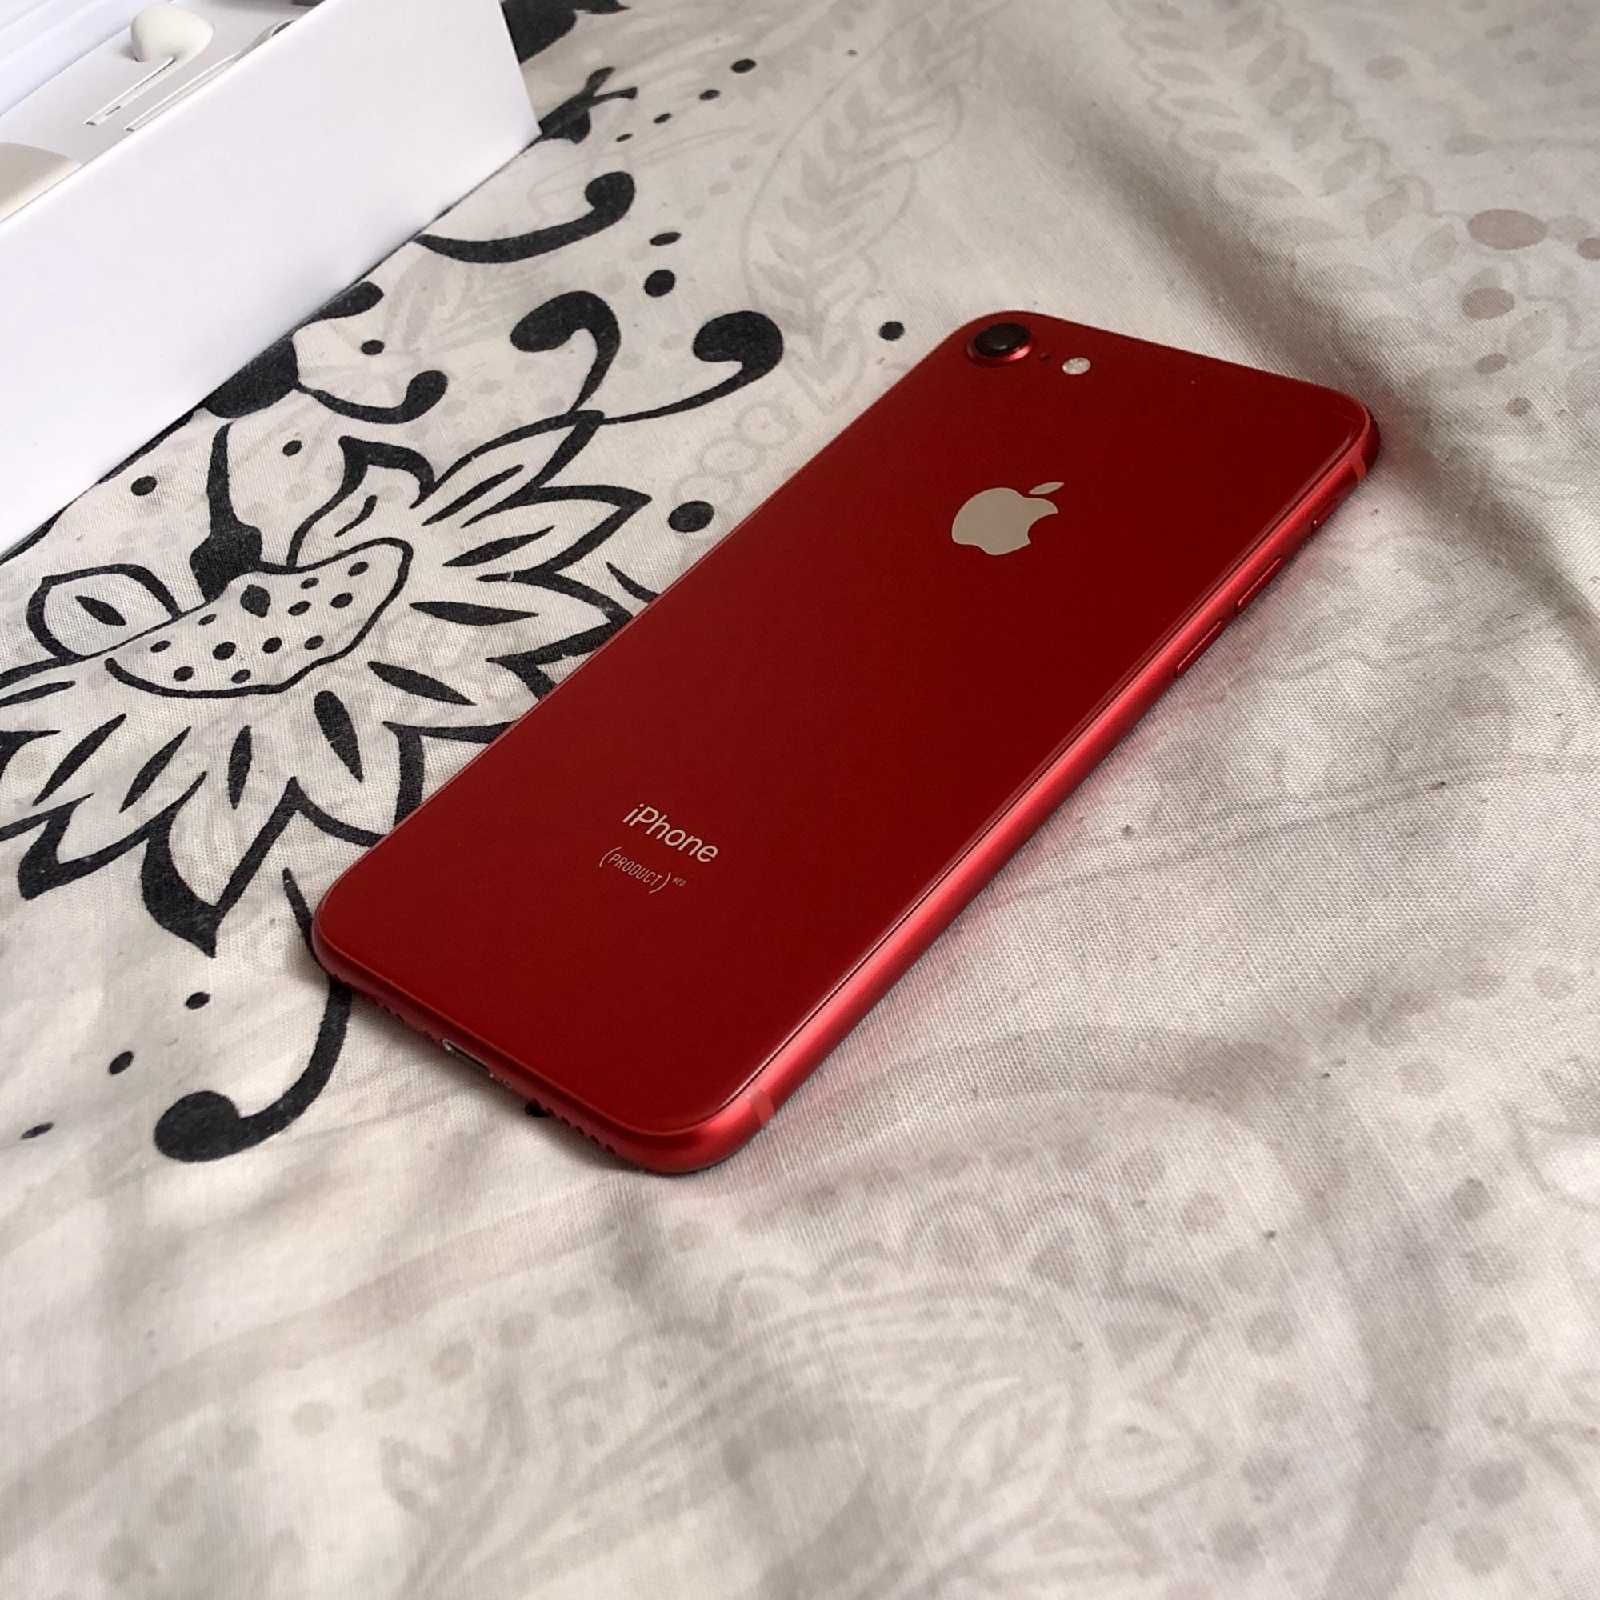 Apple iPhone 8 Red Neverlock Оригинальный телефон